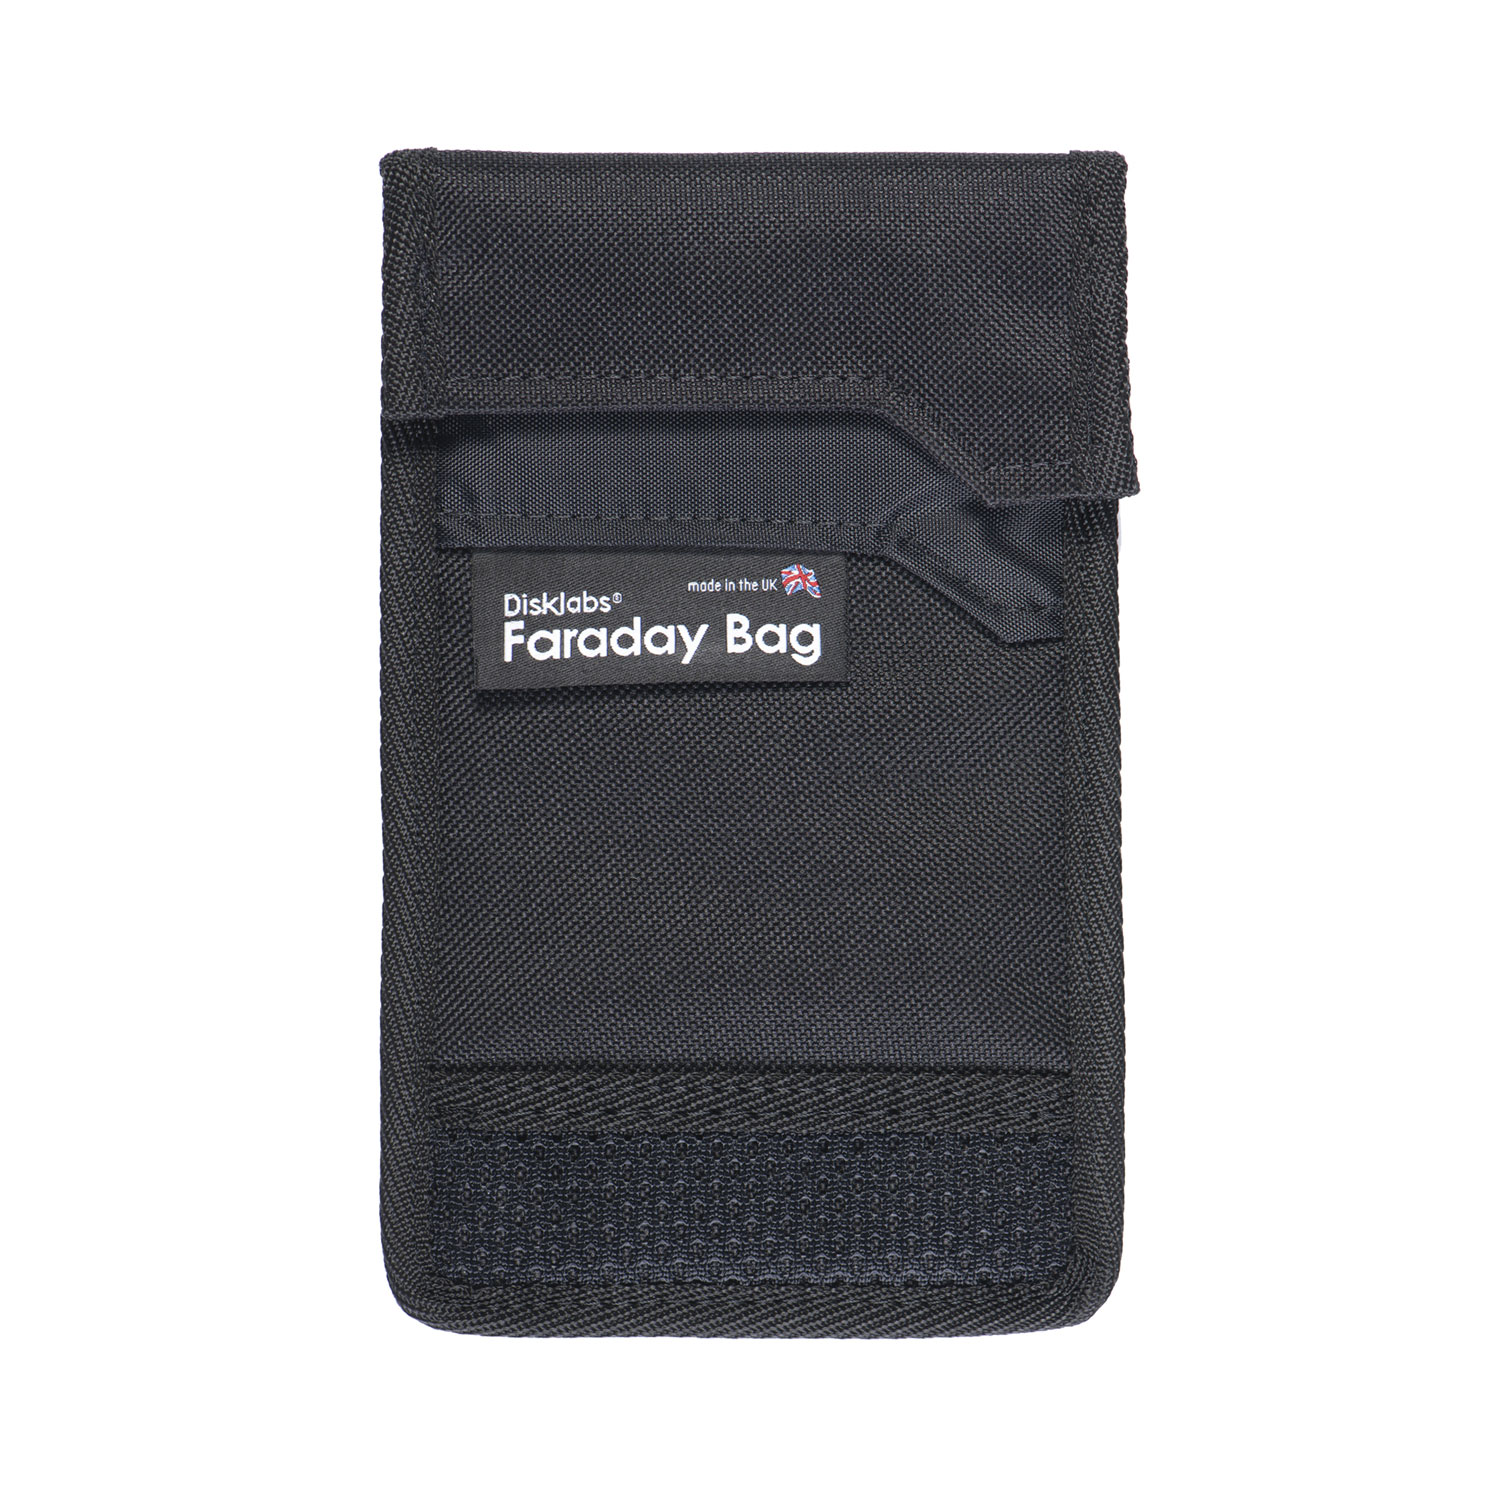 Faraday Products  FaradayBags.com – RF Shielded Faraday Bags by